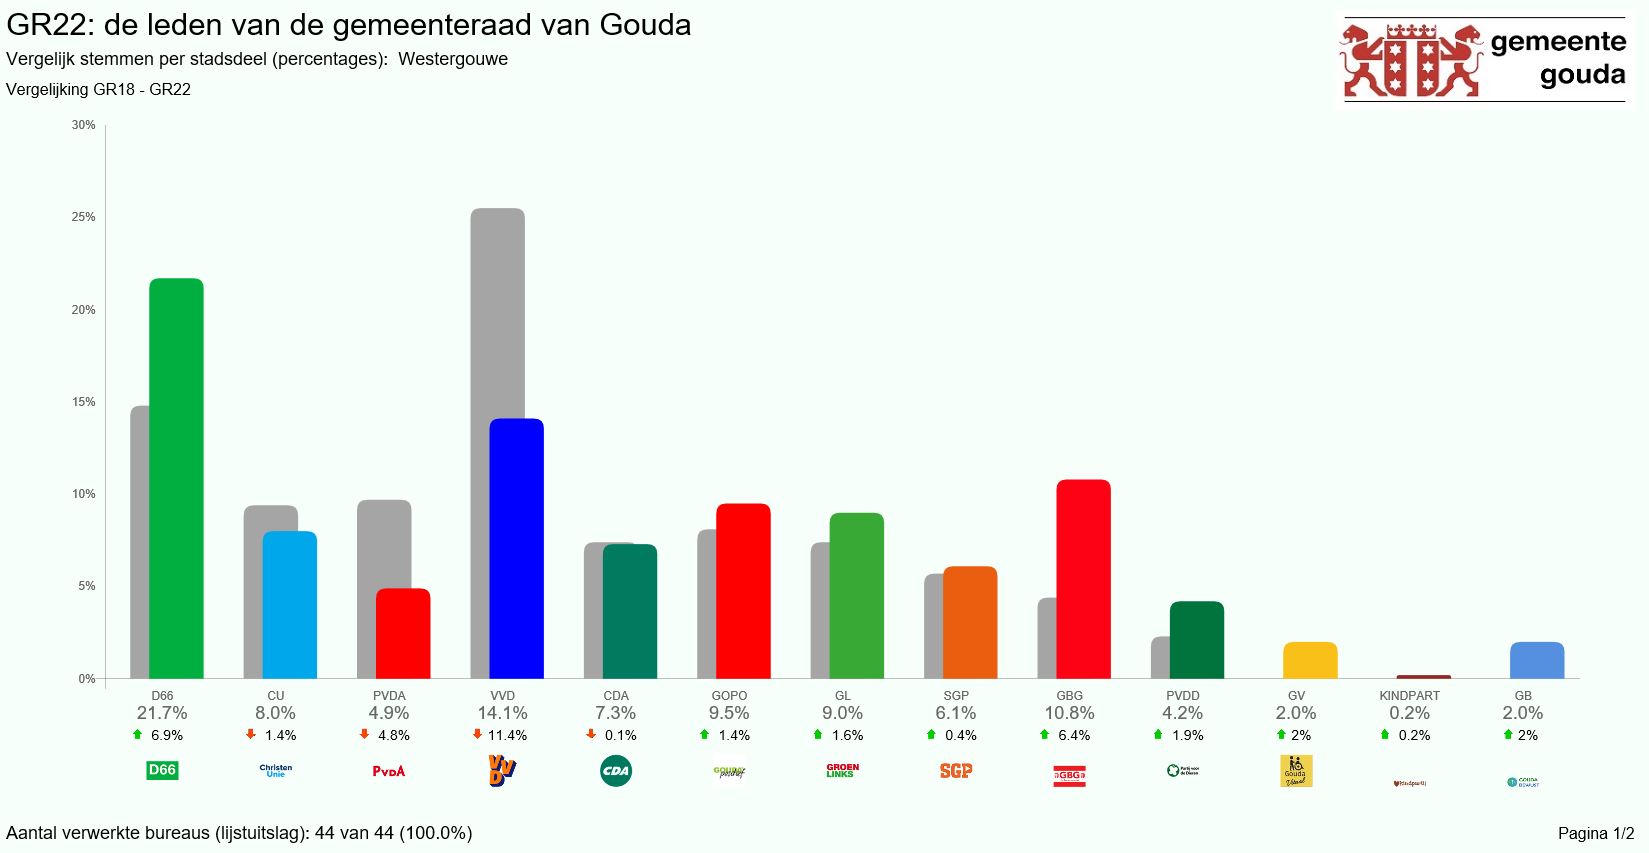 Vergelijking stemmen per partij percentages Westergouwe